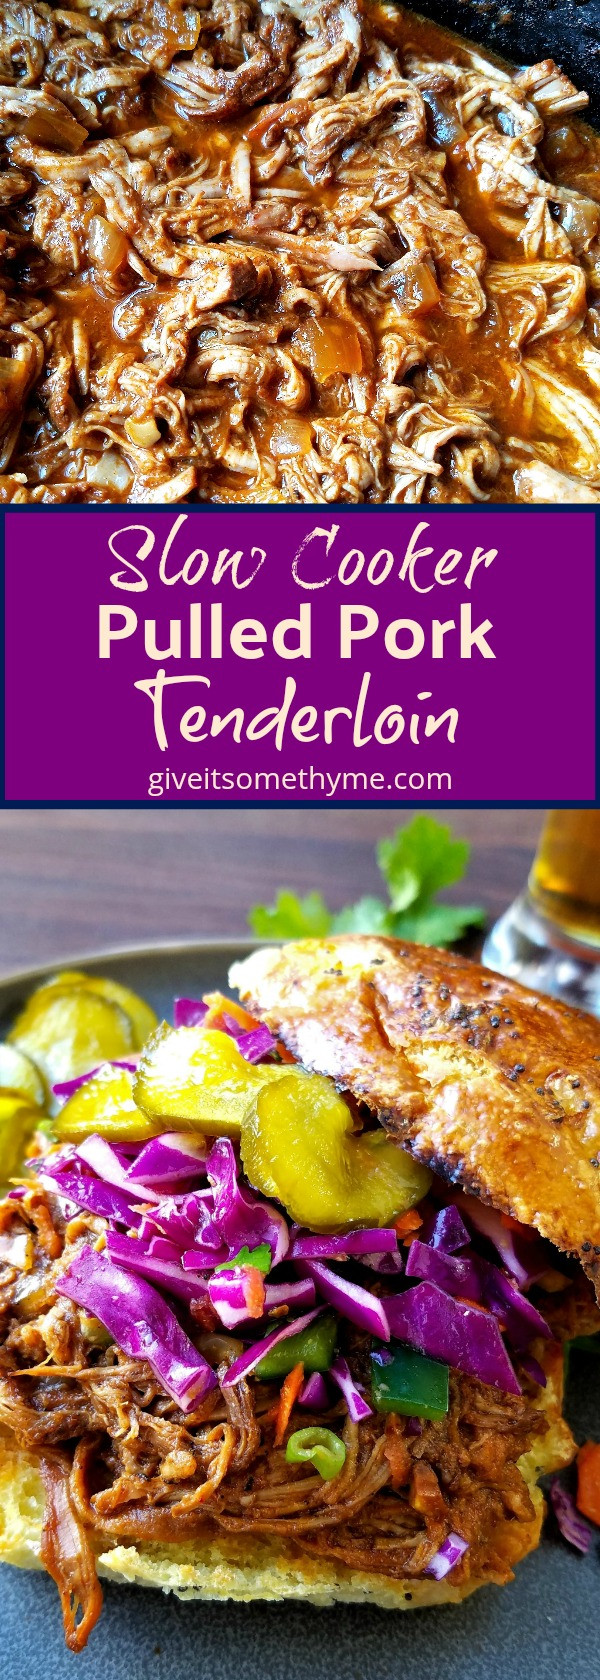 Pulled Pork Tenderloin Slow Cooker
 Slow Cooker Pulled Pork Tenderloin Give it Some Thyme